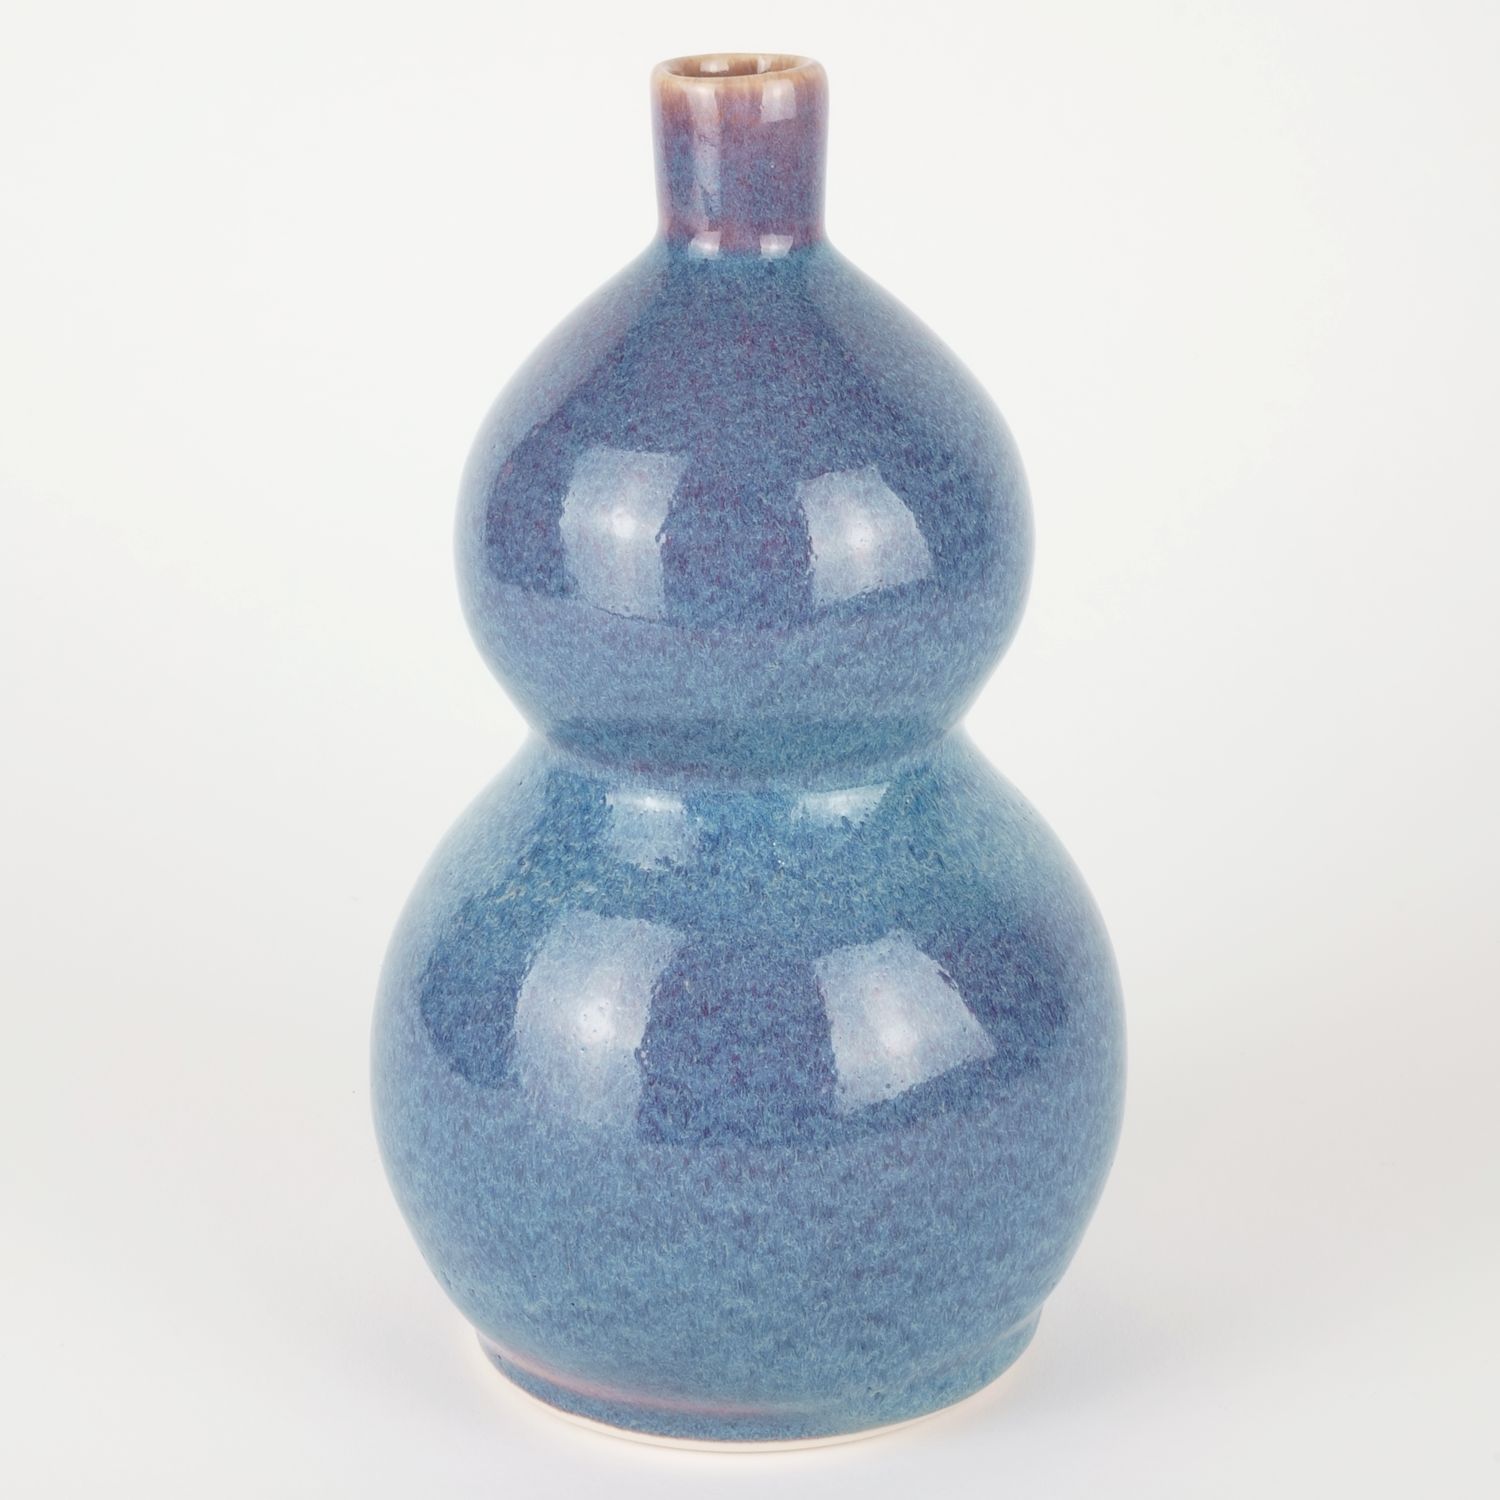 William Lee: Gourd Vase in Purple Product Image 1 of 1